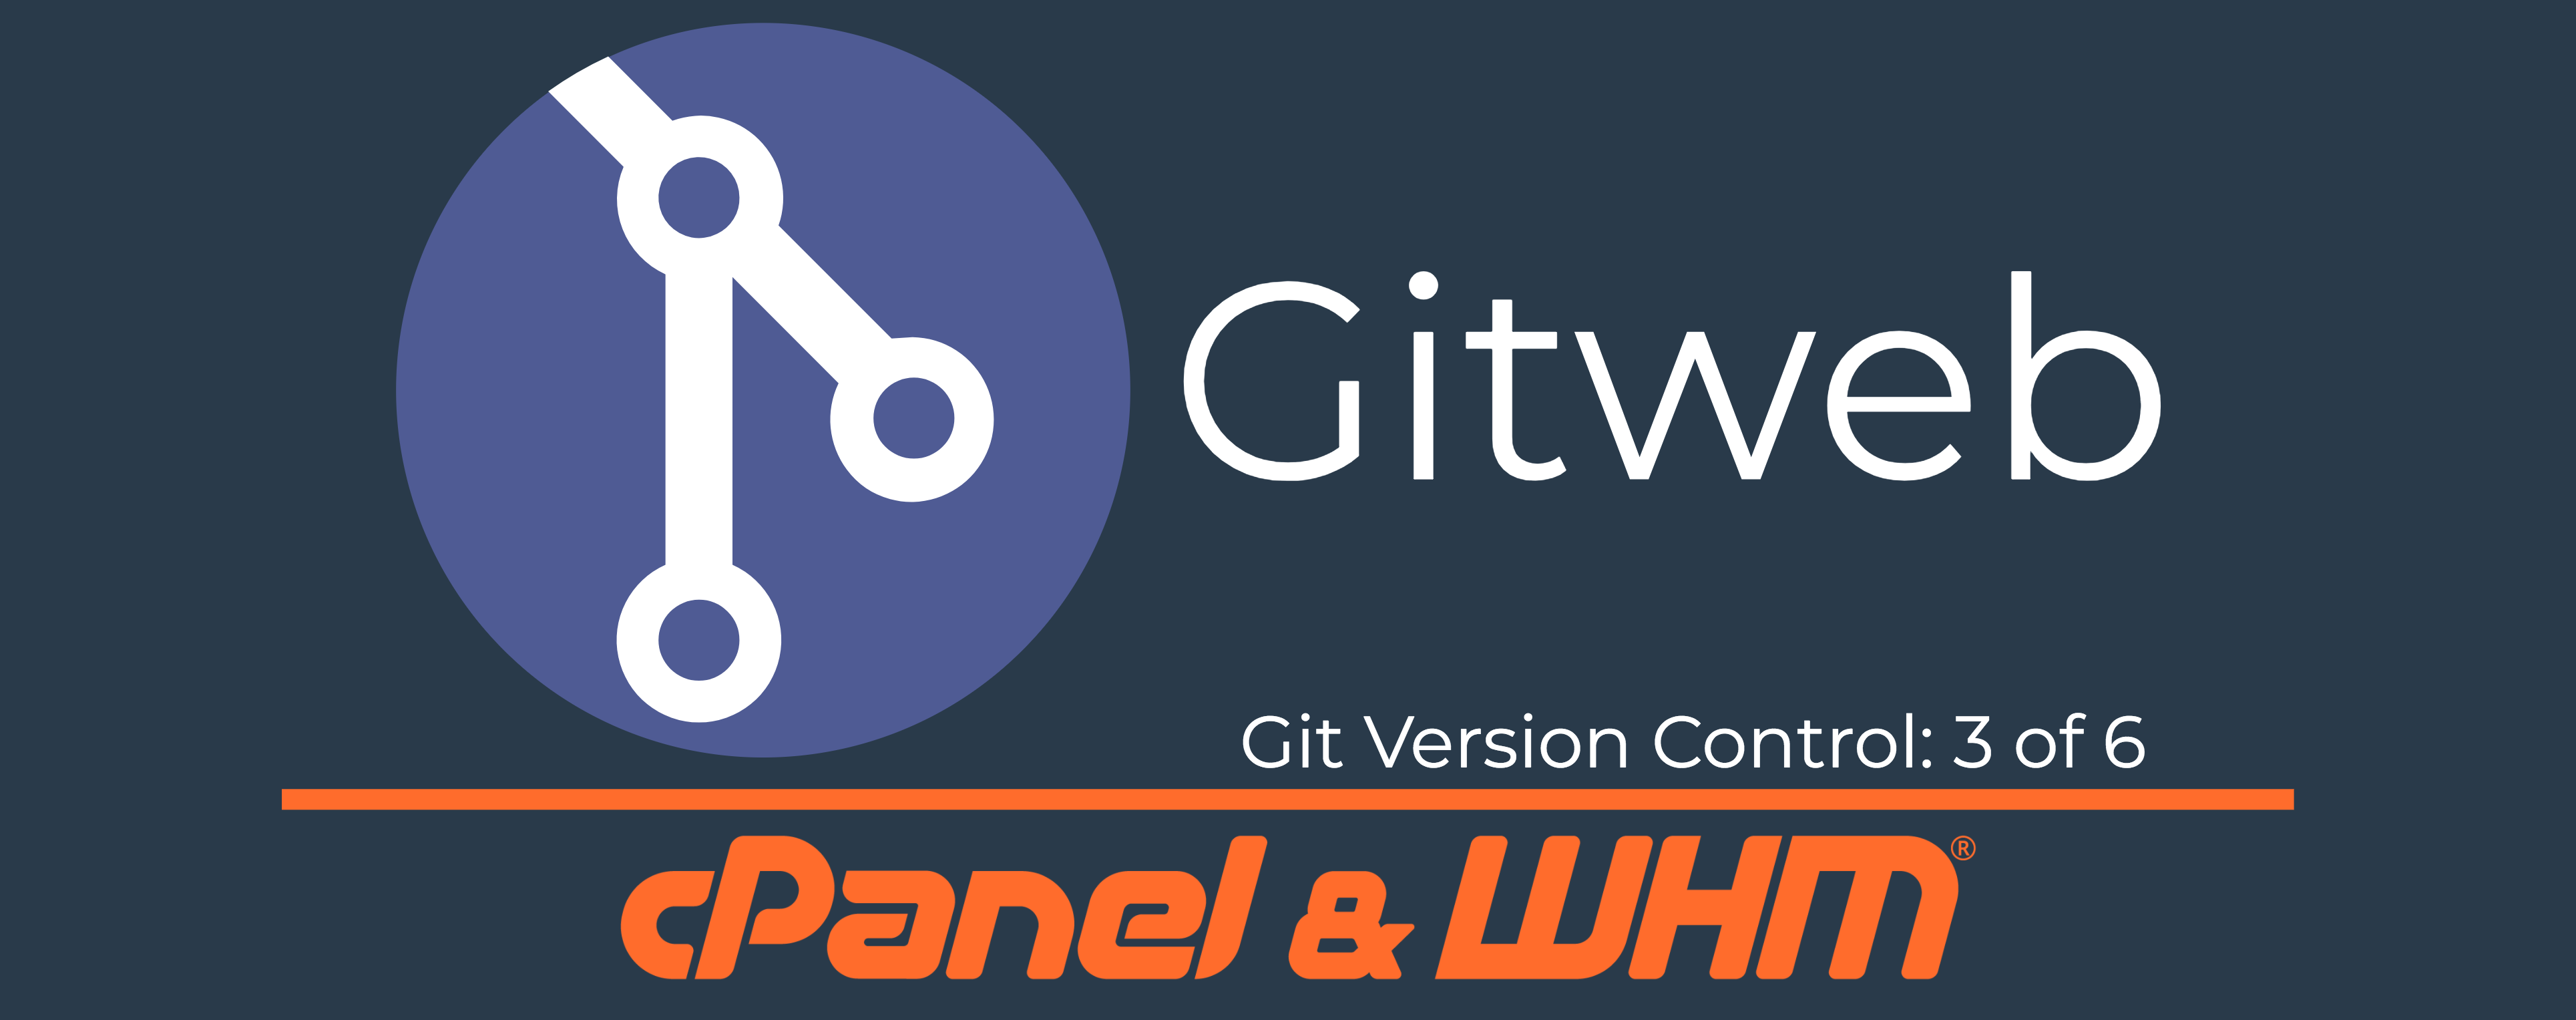 Git Version Control series: Introducing Gitweb